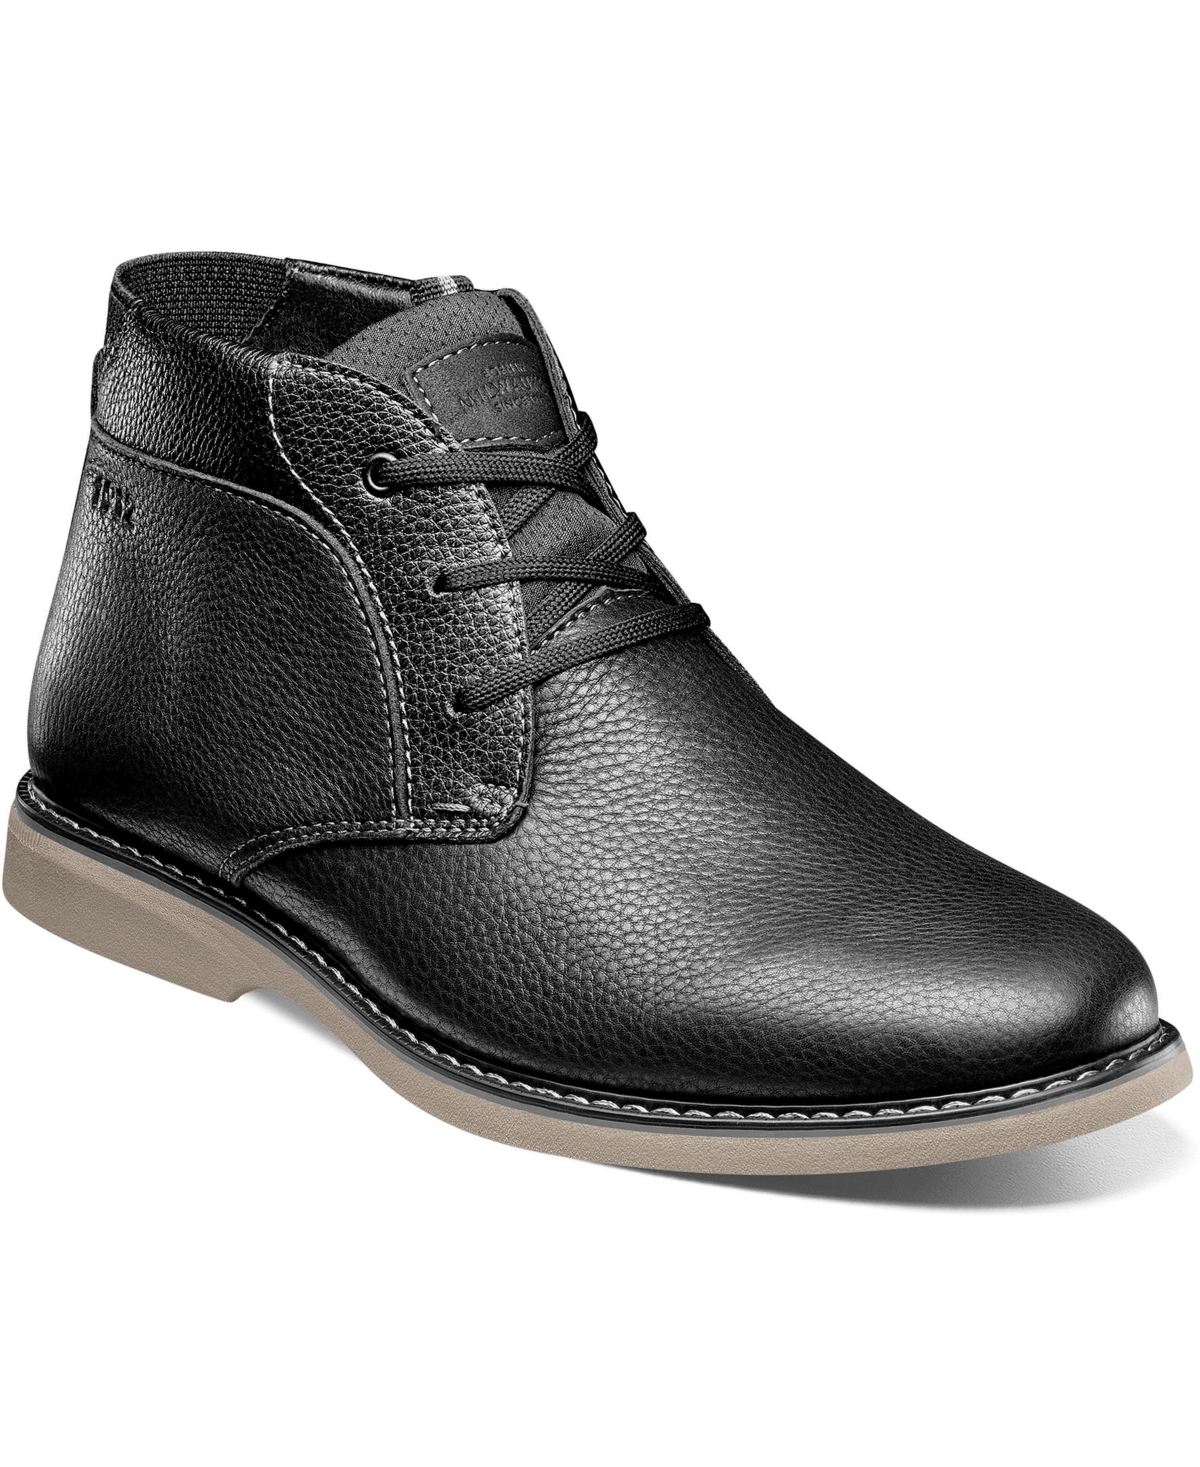 Men's Otto Plain Toe Chukka Boots - Black Tumble